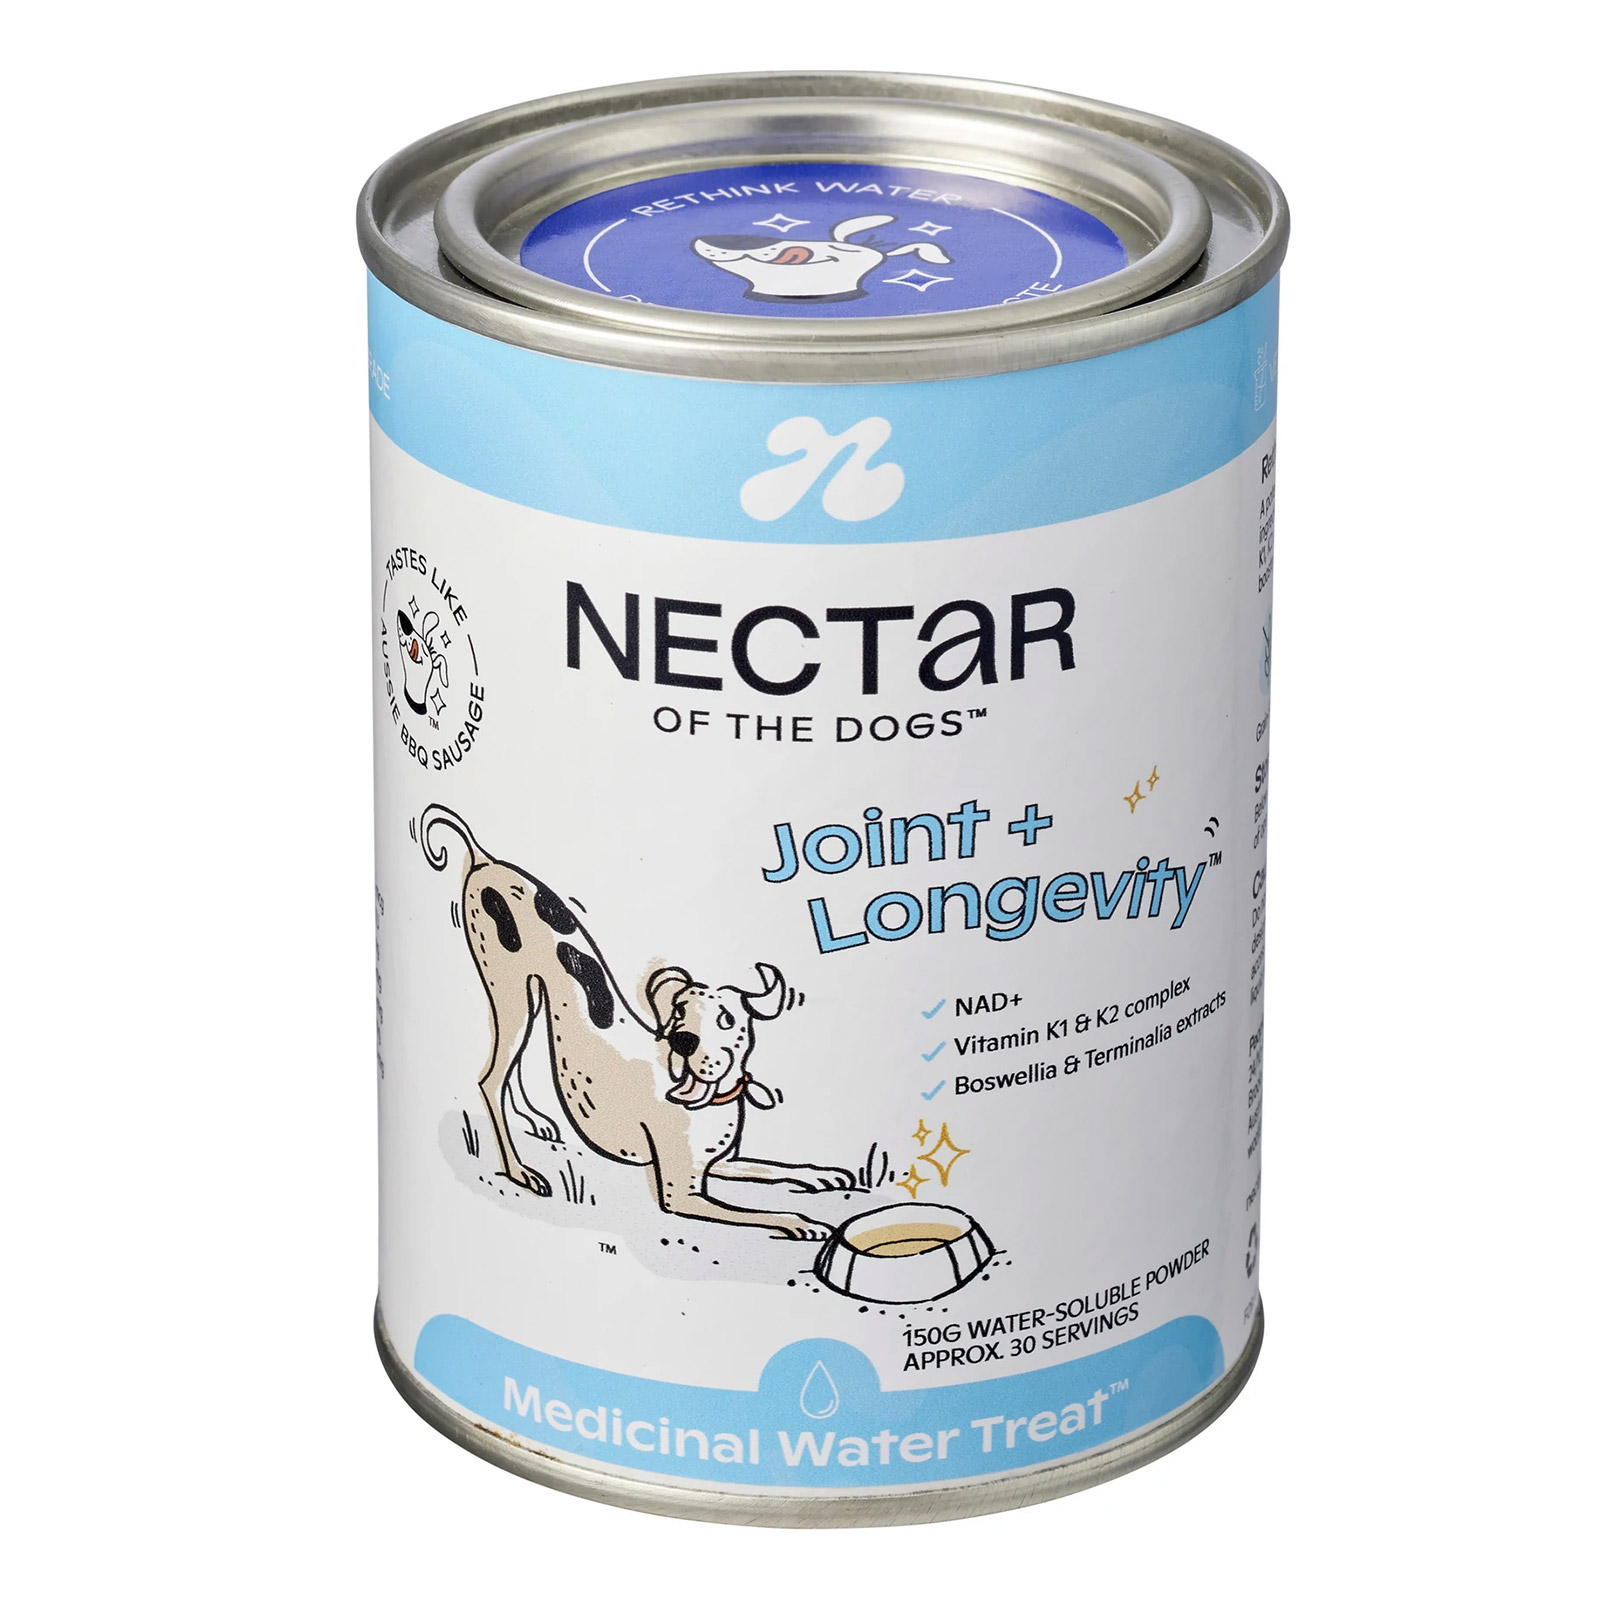 Nectar Joint & Longevity Powder for Dogs